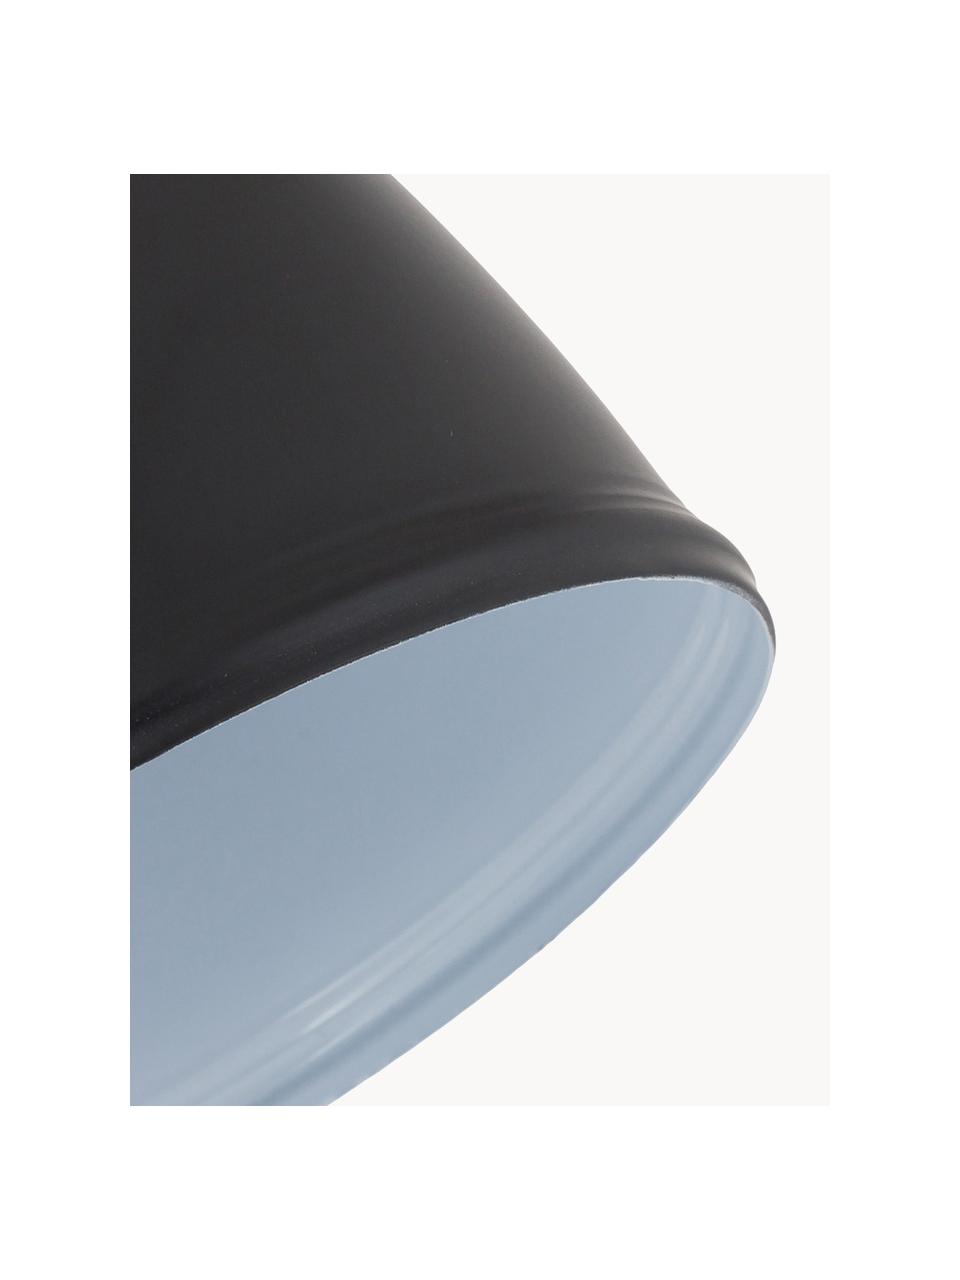 Verstelbare wandlamp Fjallbacka met stekker, Lampenkap: gecoat metaal, Zwart, D 20 x H 17 cm